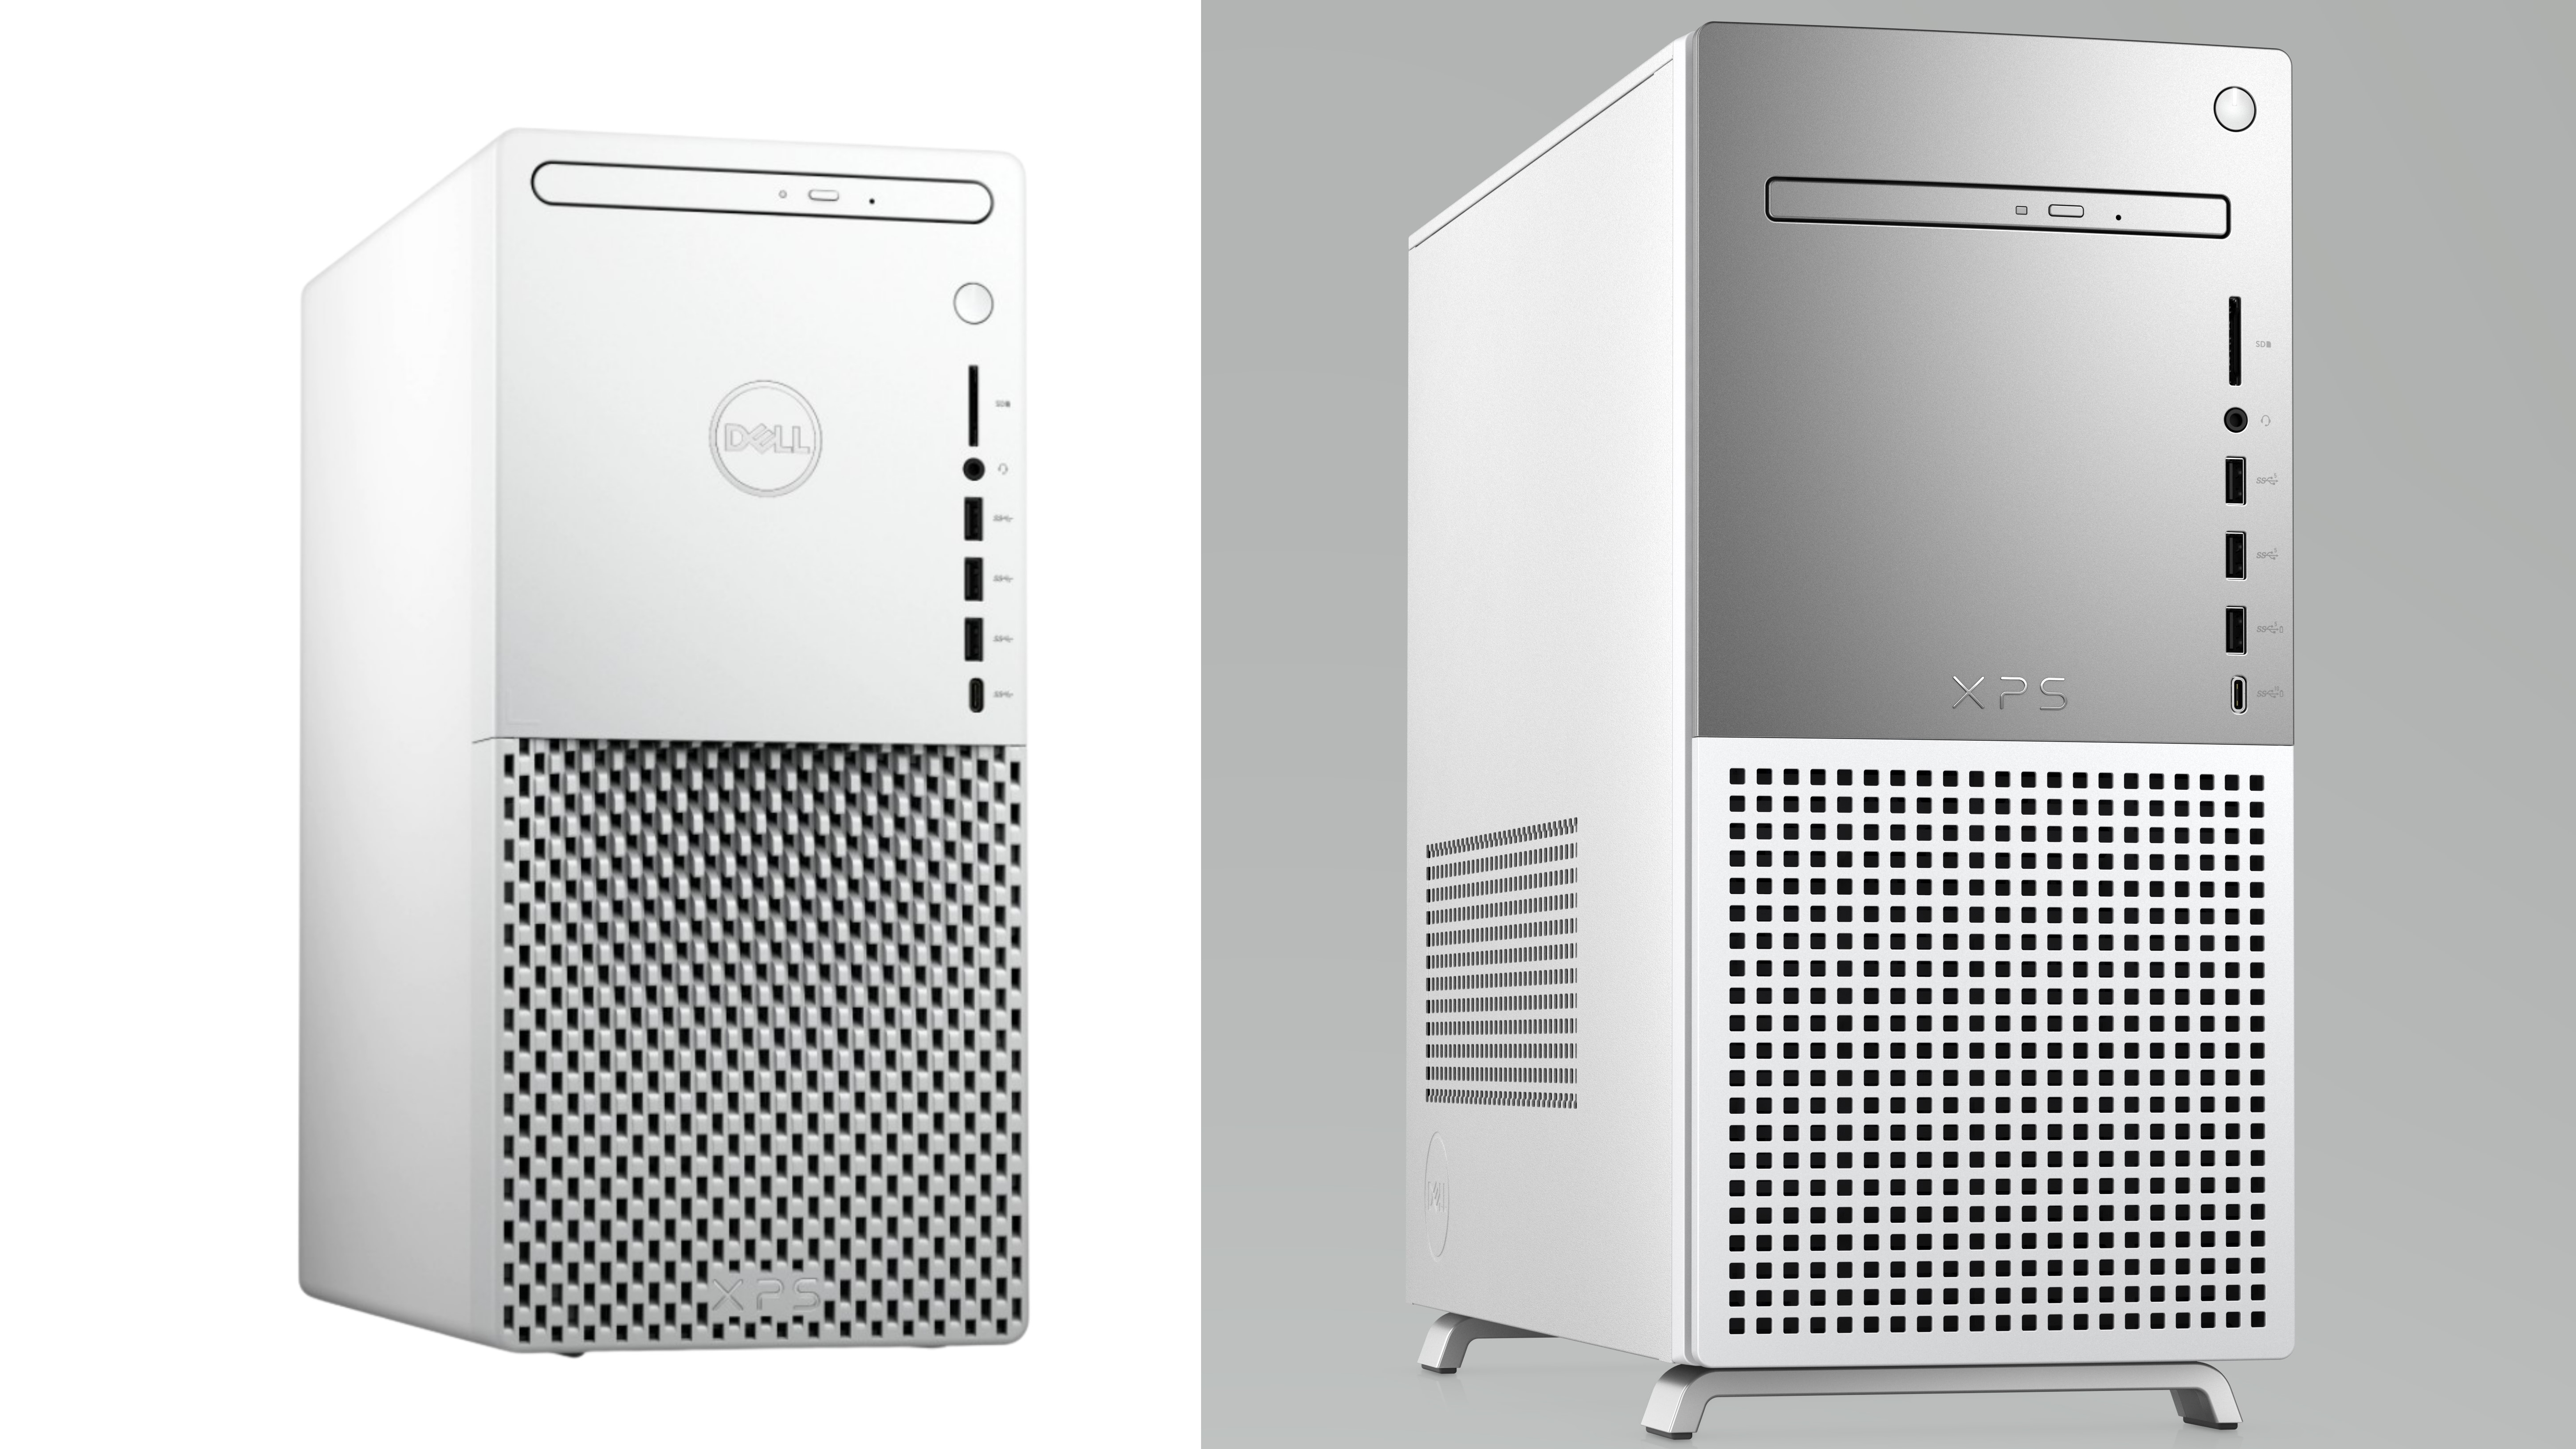 Dell's XPS Desktop gets a new look and liquid cooling | Ars Technica